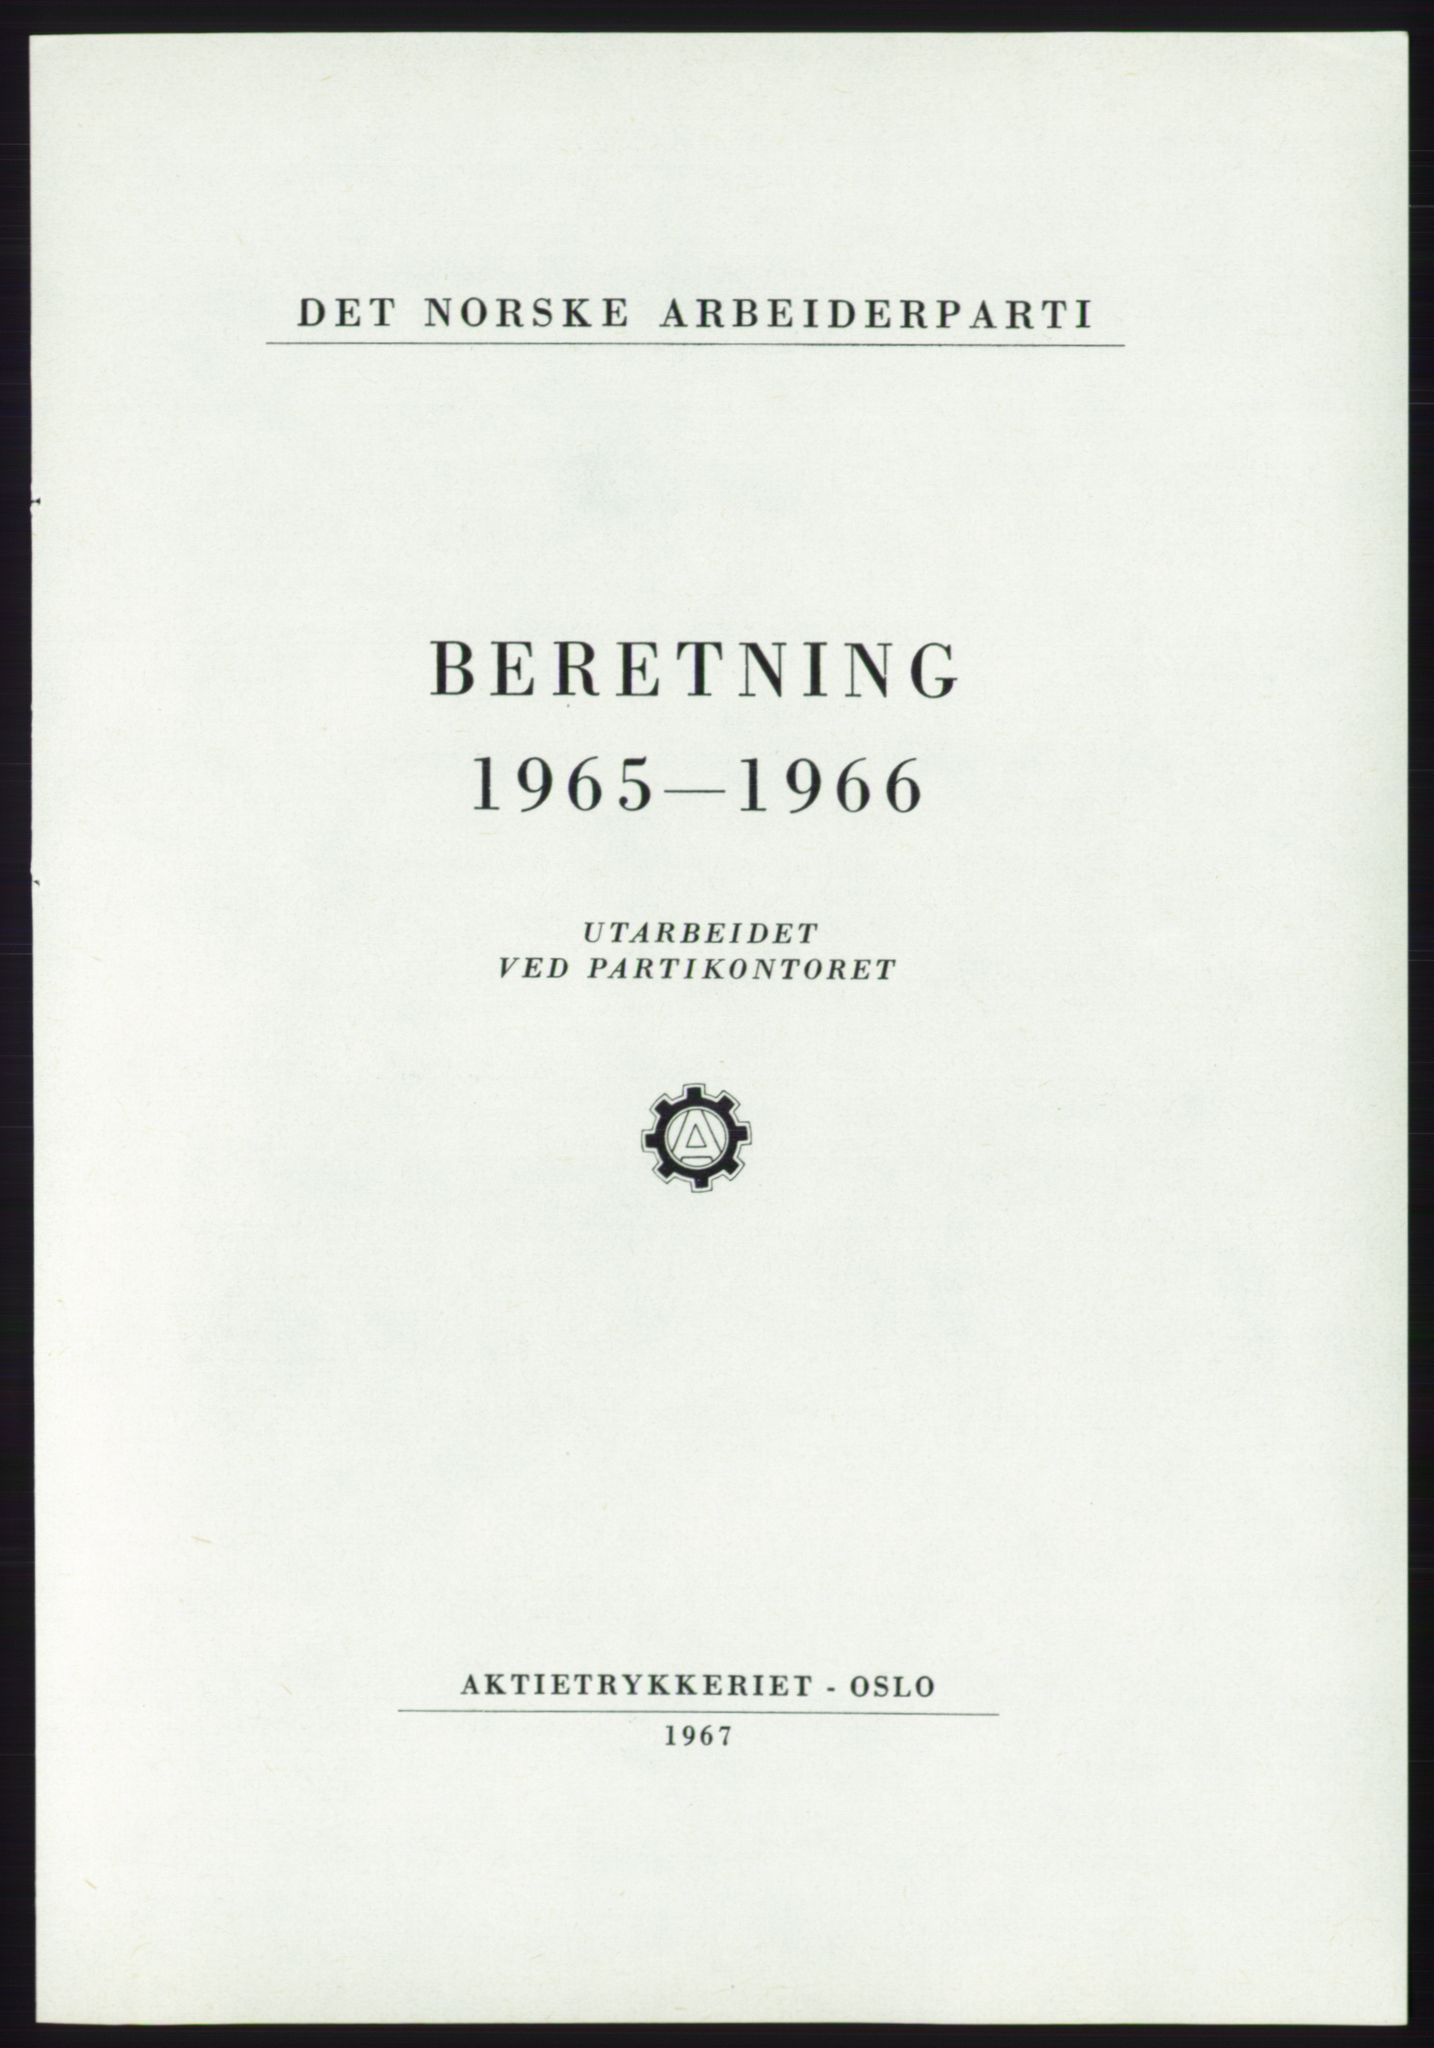 Det norske Arbeiderparti - publikasjoner, AAB/-/-/-: Beretning 1965-1966, 1965-1966